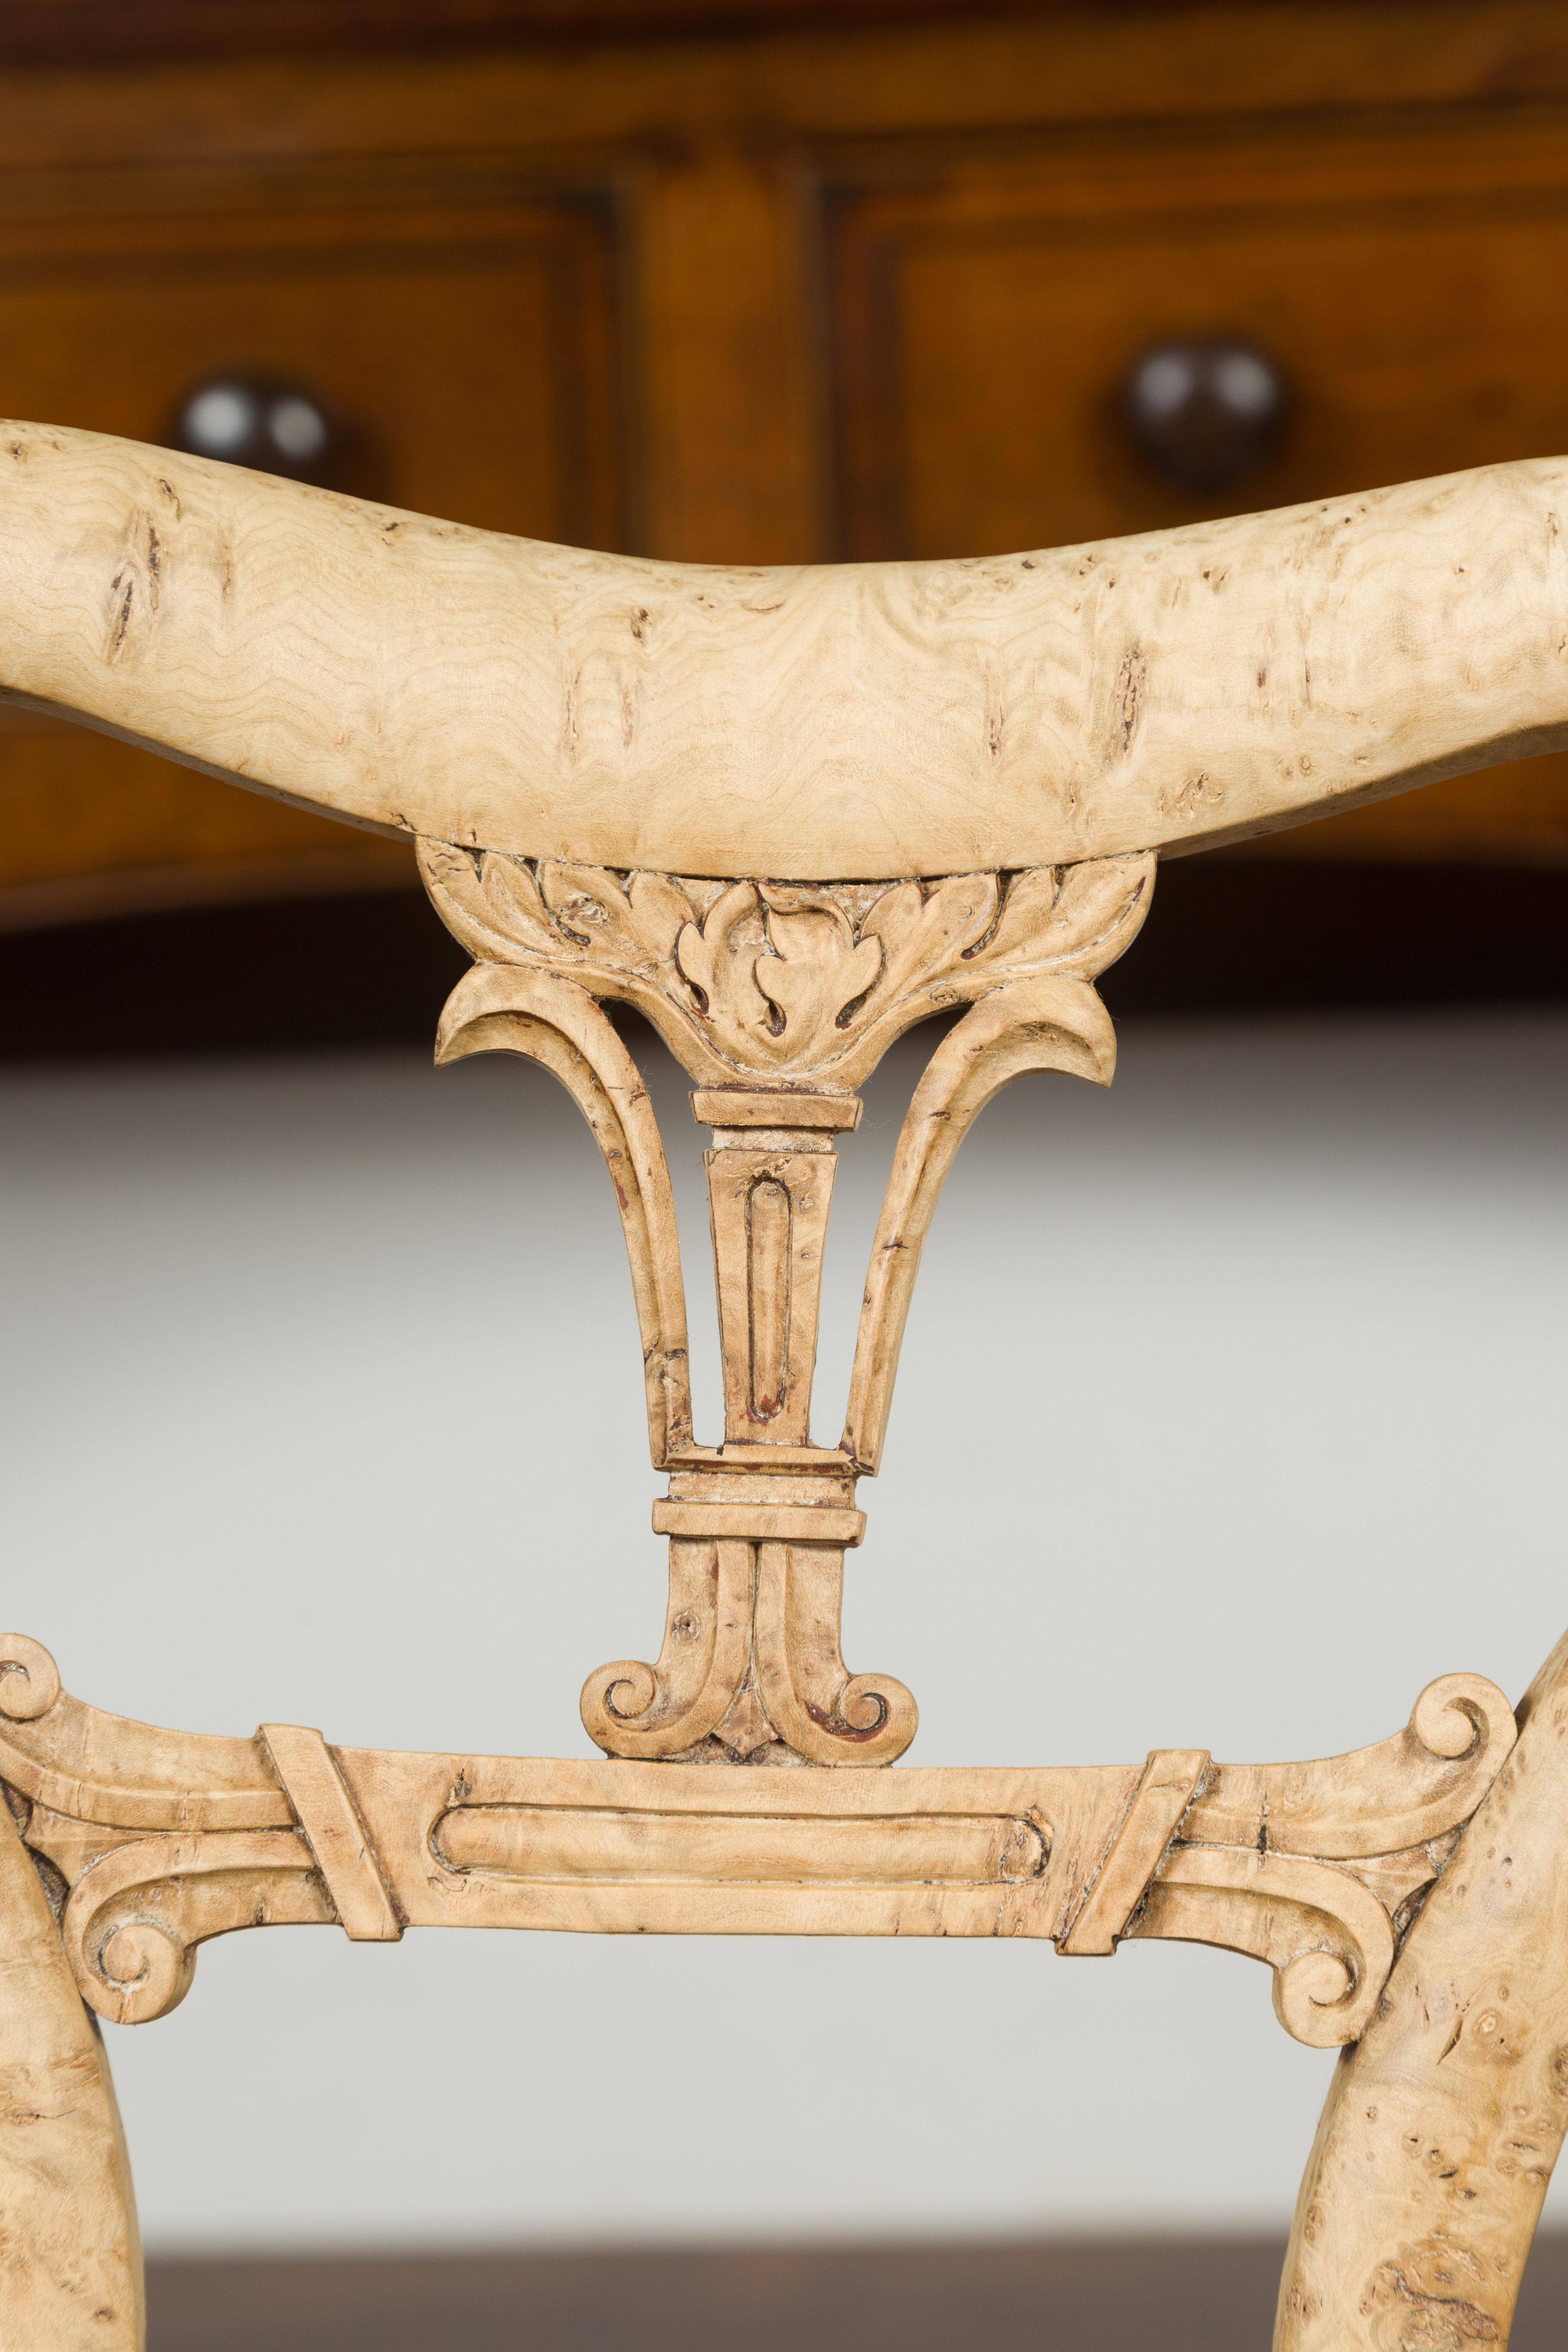 Austrian 1840s Biedermeier Bleached Burled Walnut Swivel Chair with Upholstery For Sale 3